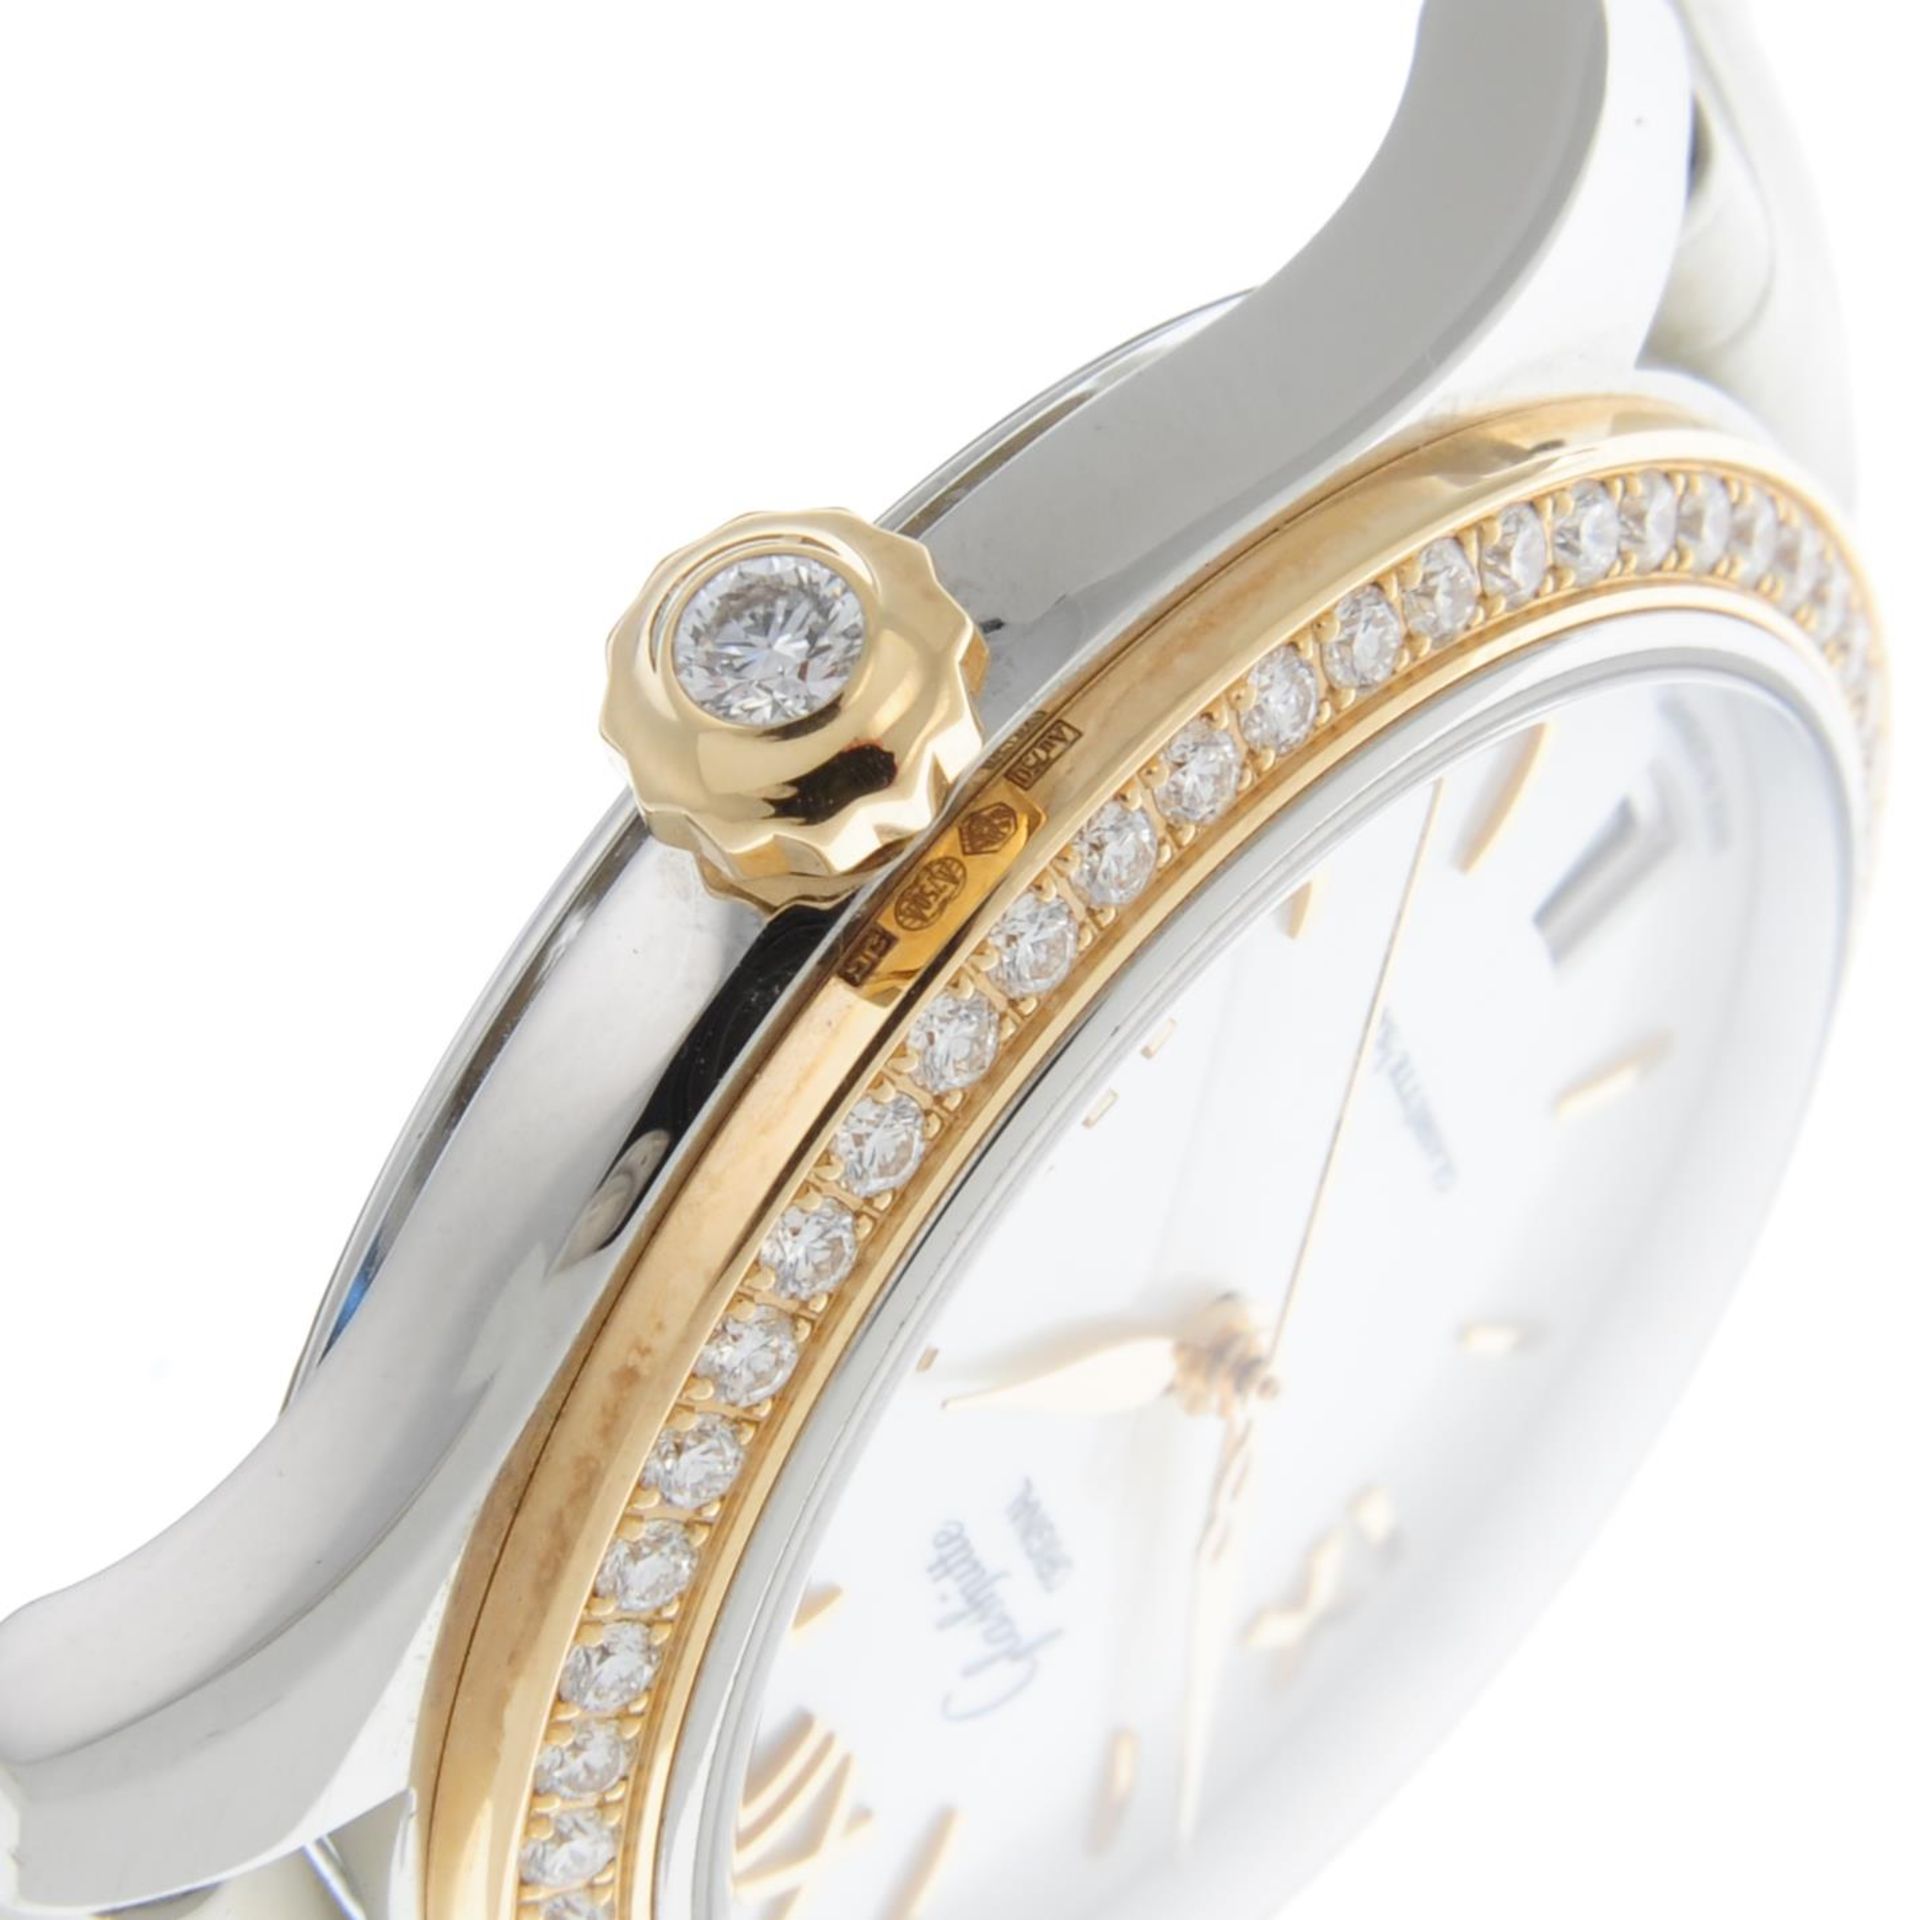 GLASHÜTTE ORIGINAL - a Serenade wrist watch. - Image 5 of 6